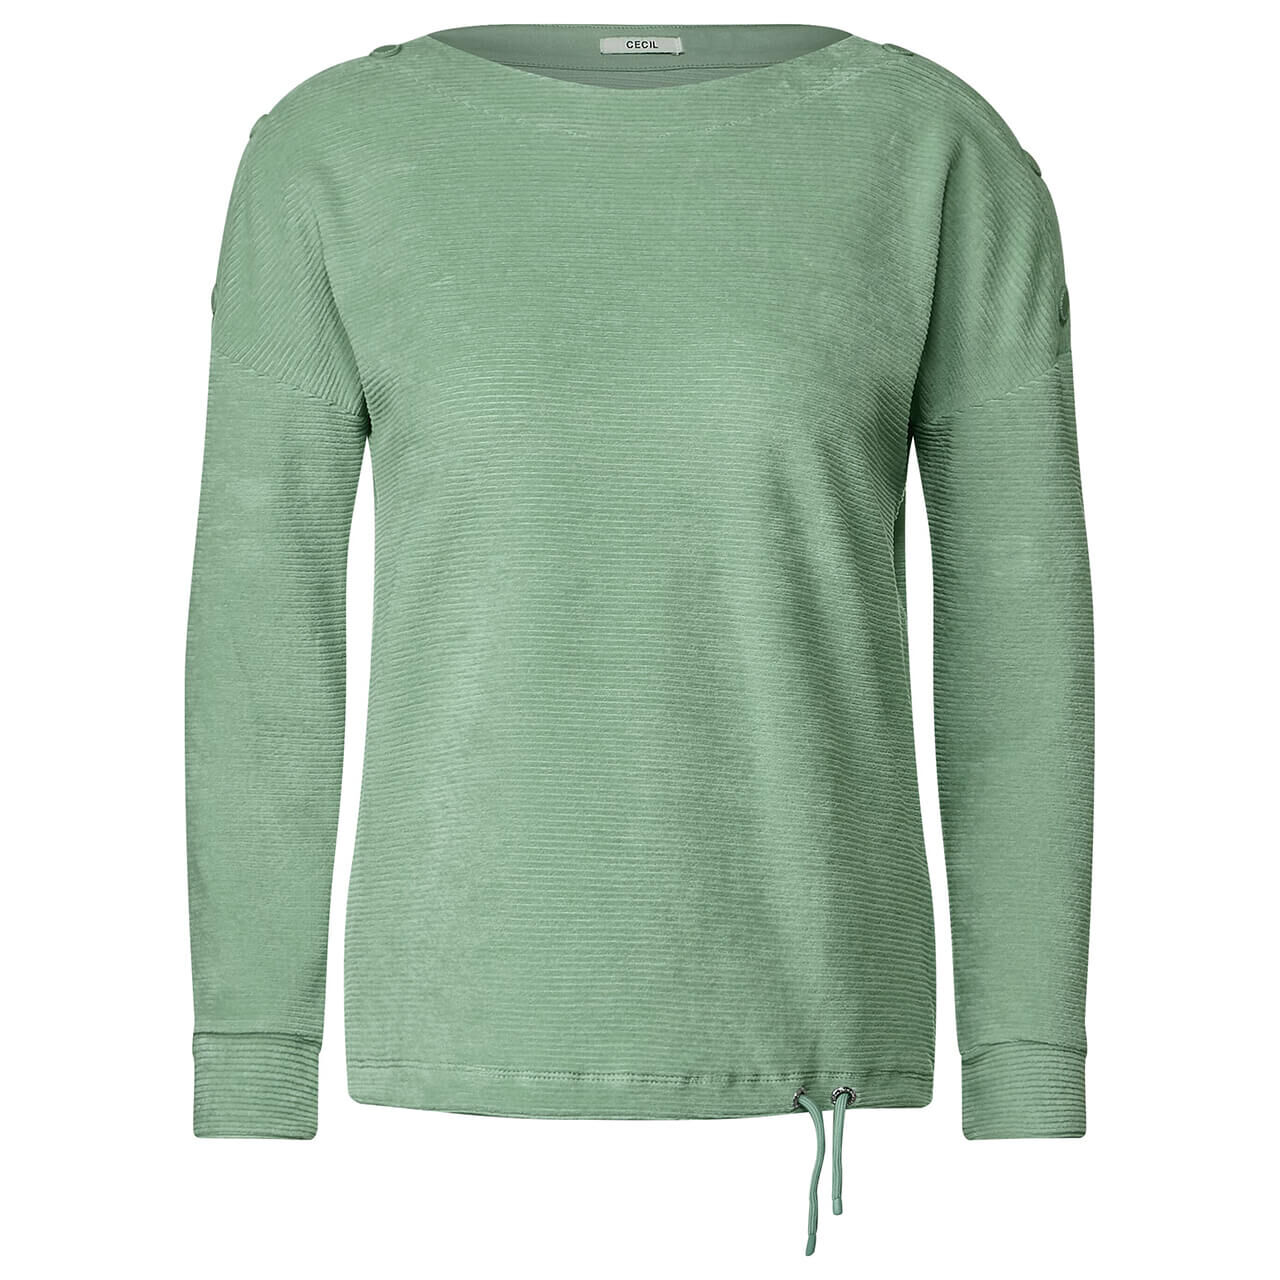 Cecil Cord Langarm Shirt clear sage green